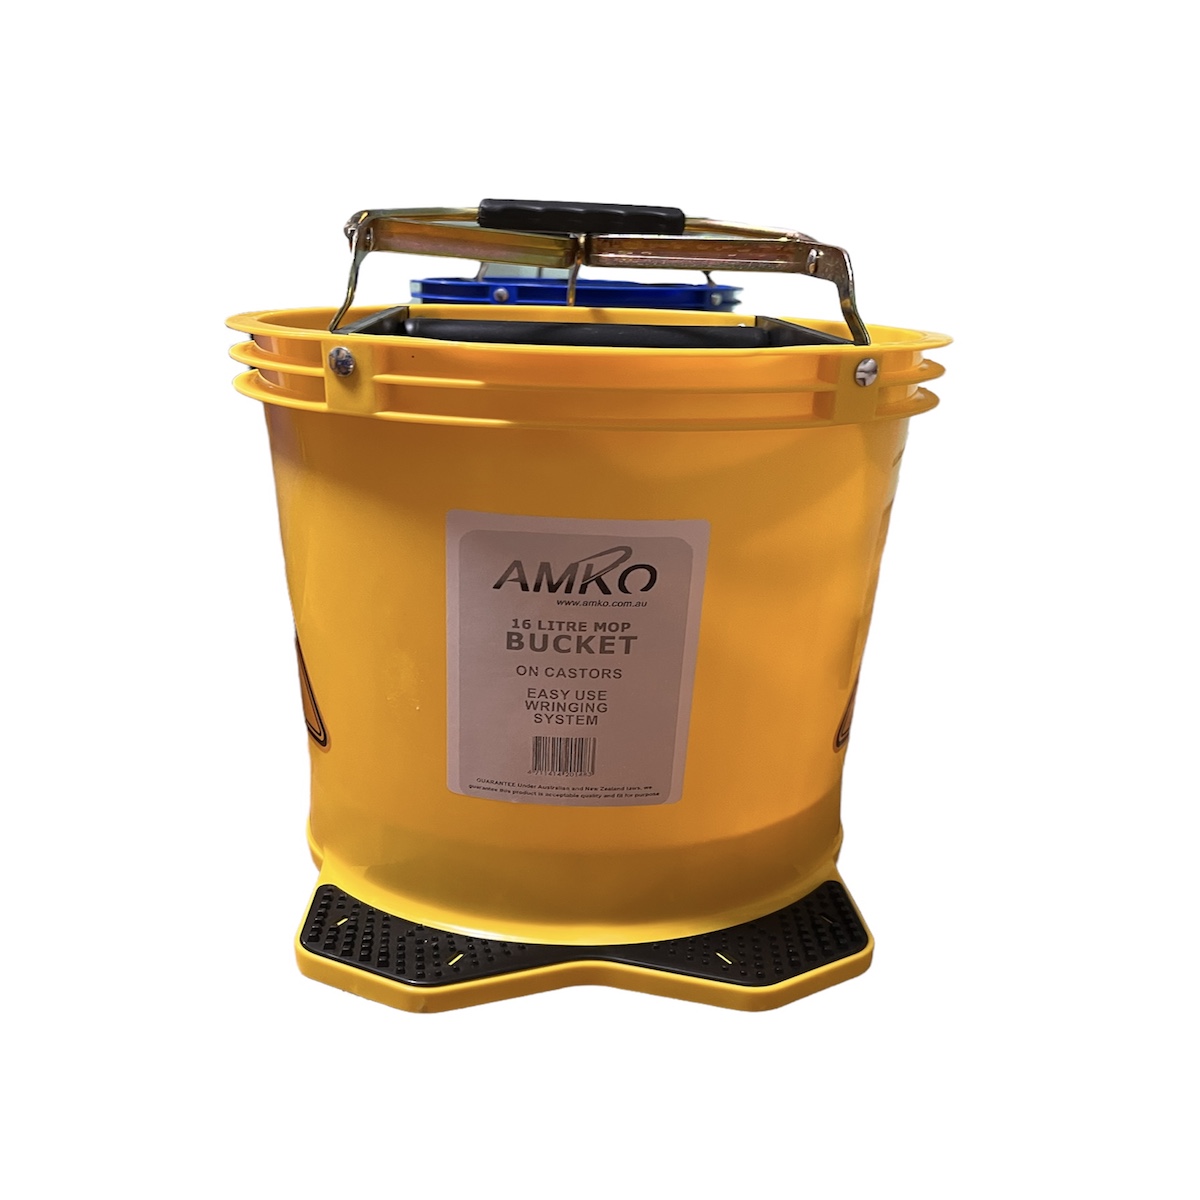 mako yellow mop bucket